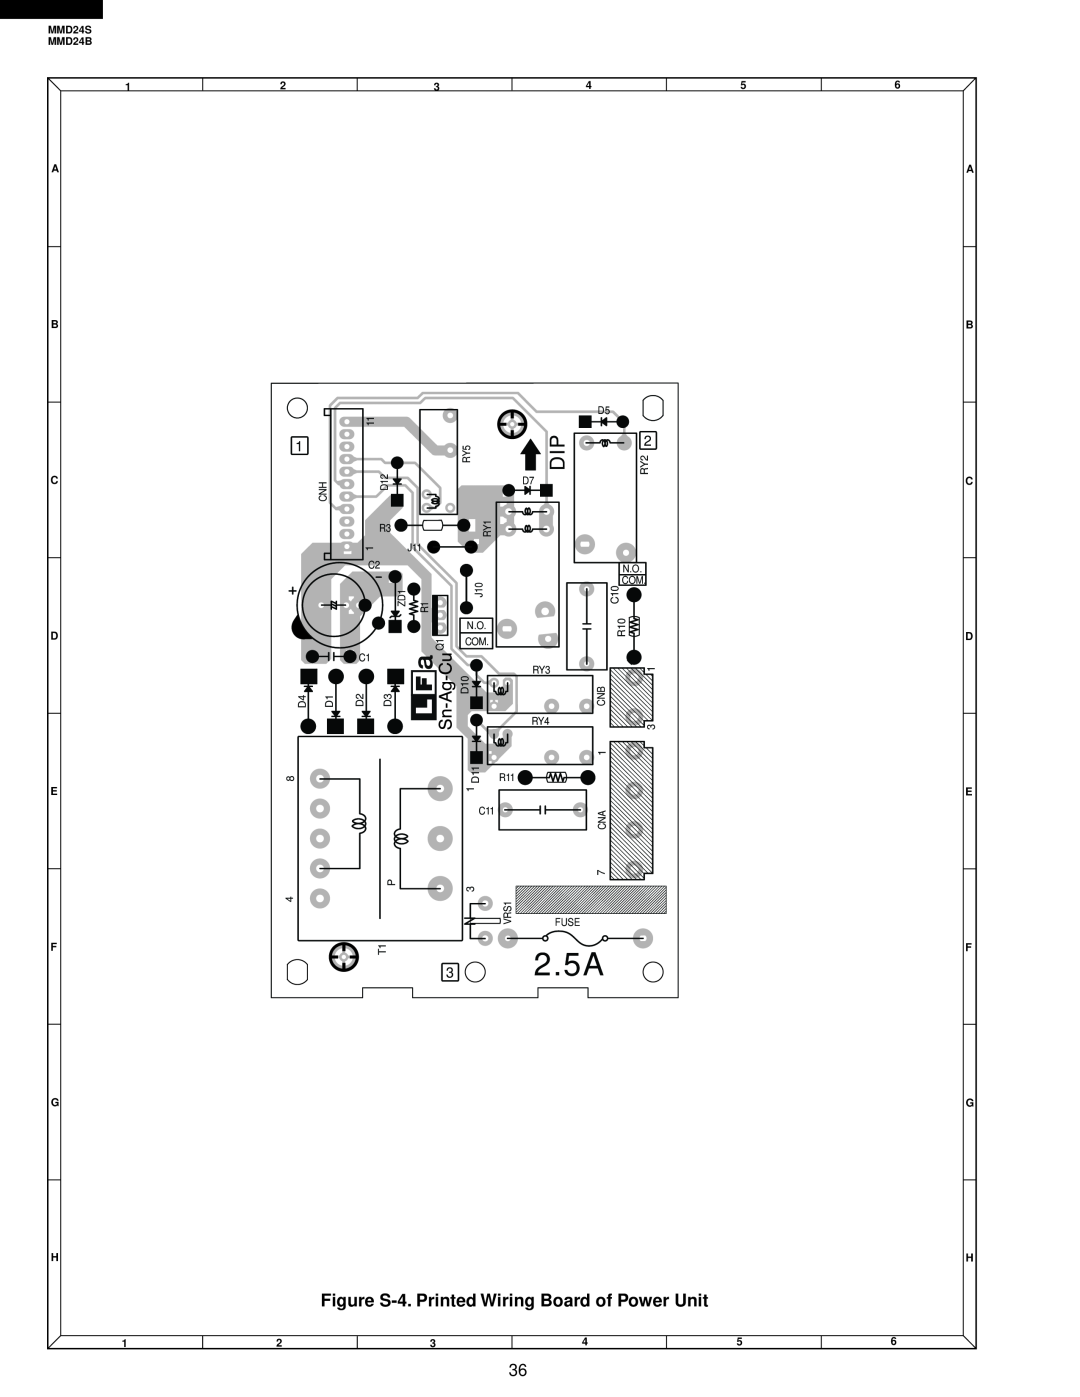 Sharp manual 2.5A, Figure S-4. Printed Wiring Board of Power Unit, MMD24S MMD24B, A B C D E F G H 